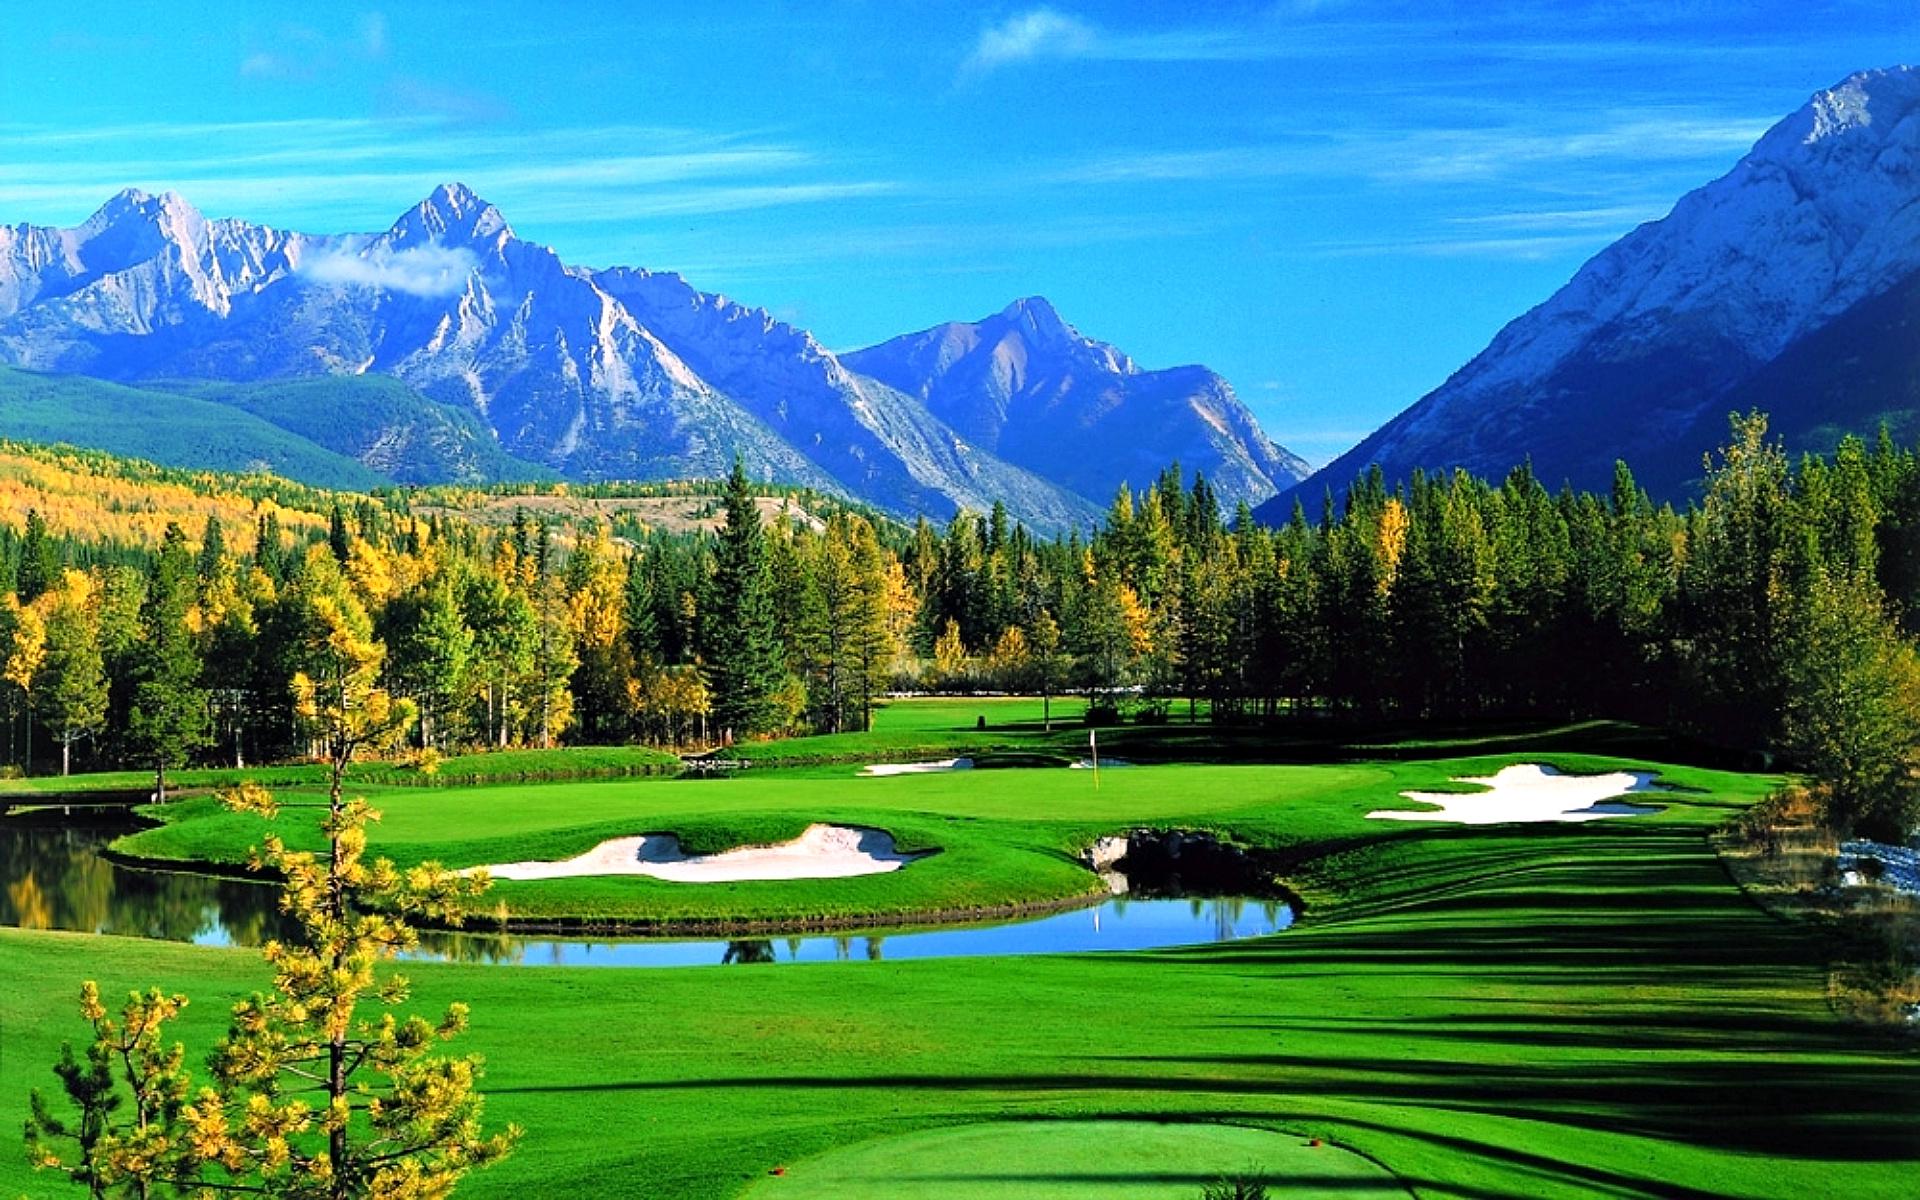 Golf course wallpaper widescreen